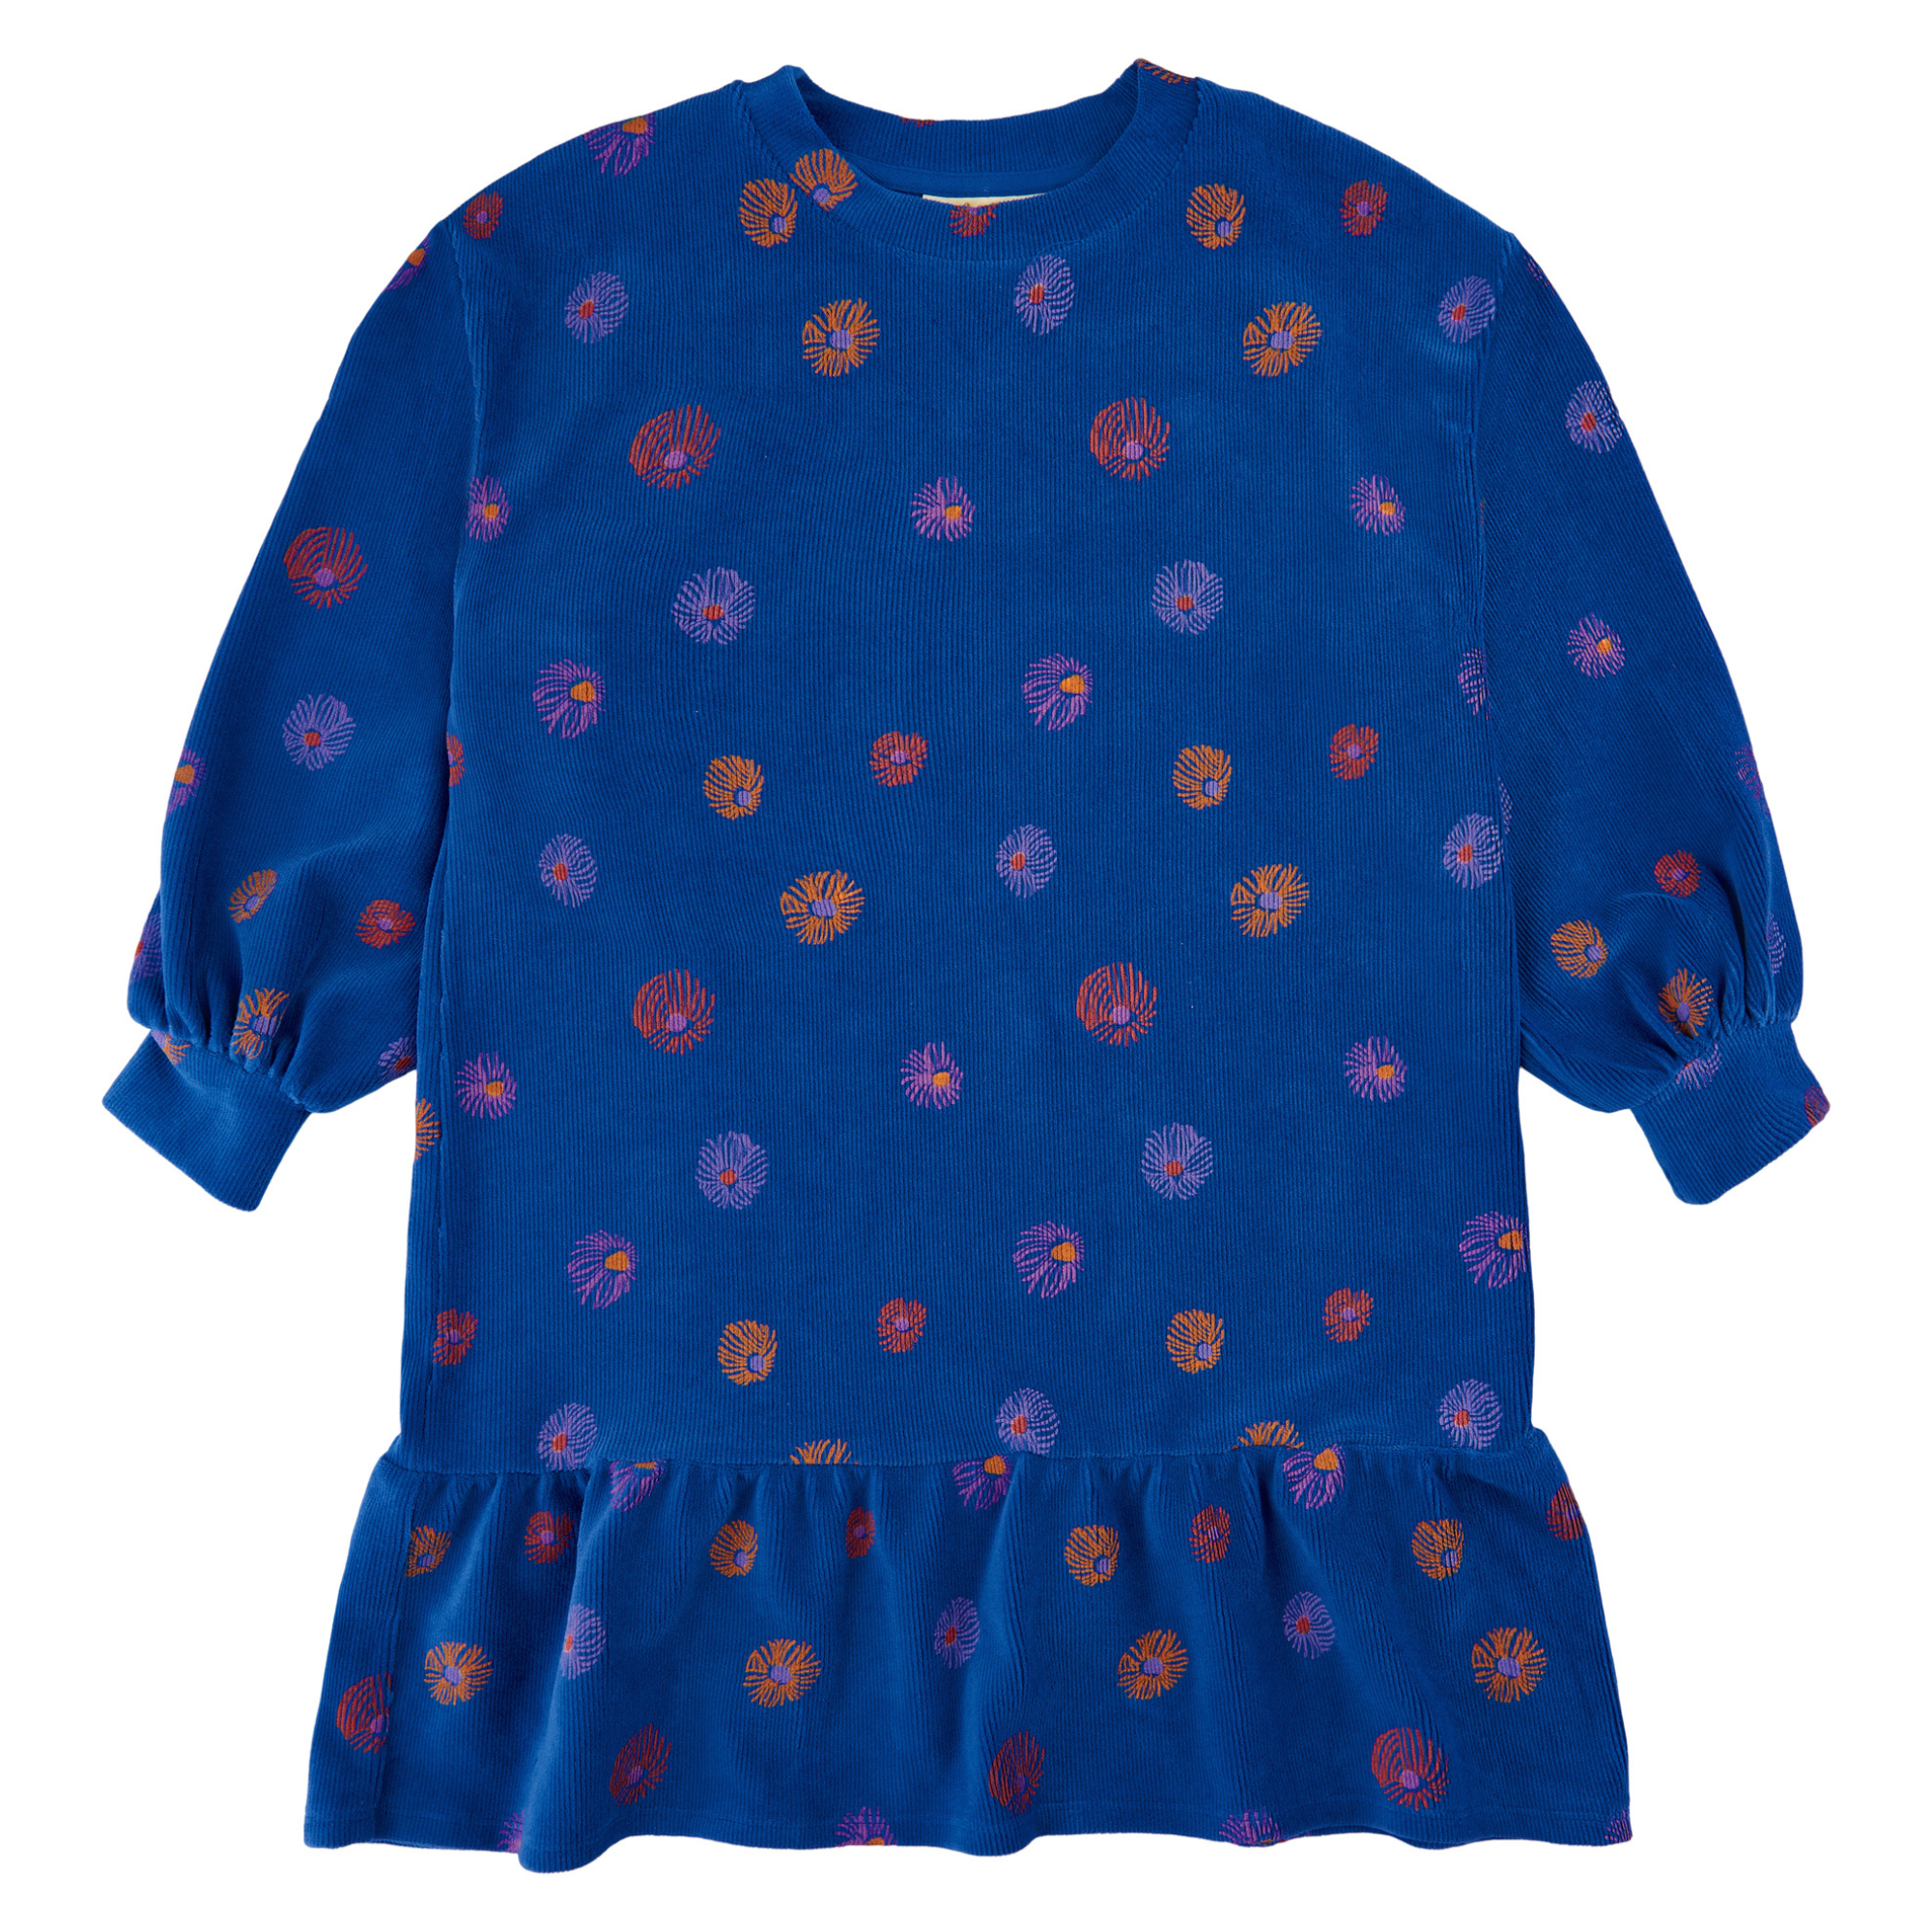 Soft Gallery - Imanuella Velvet LS Dress, SG2257 - True Blue